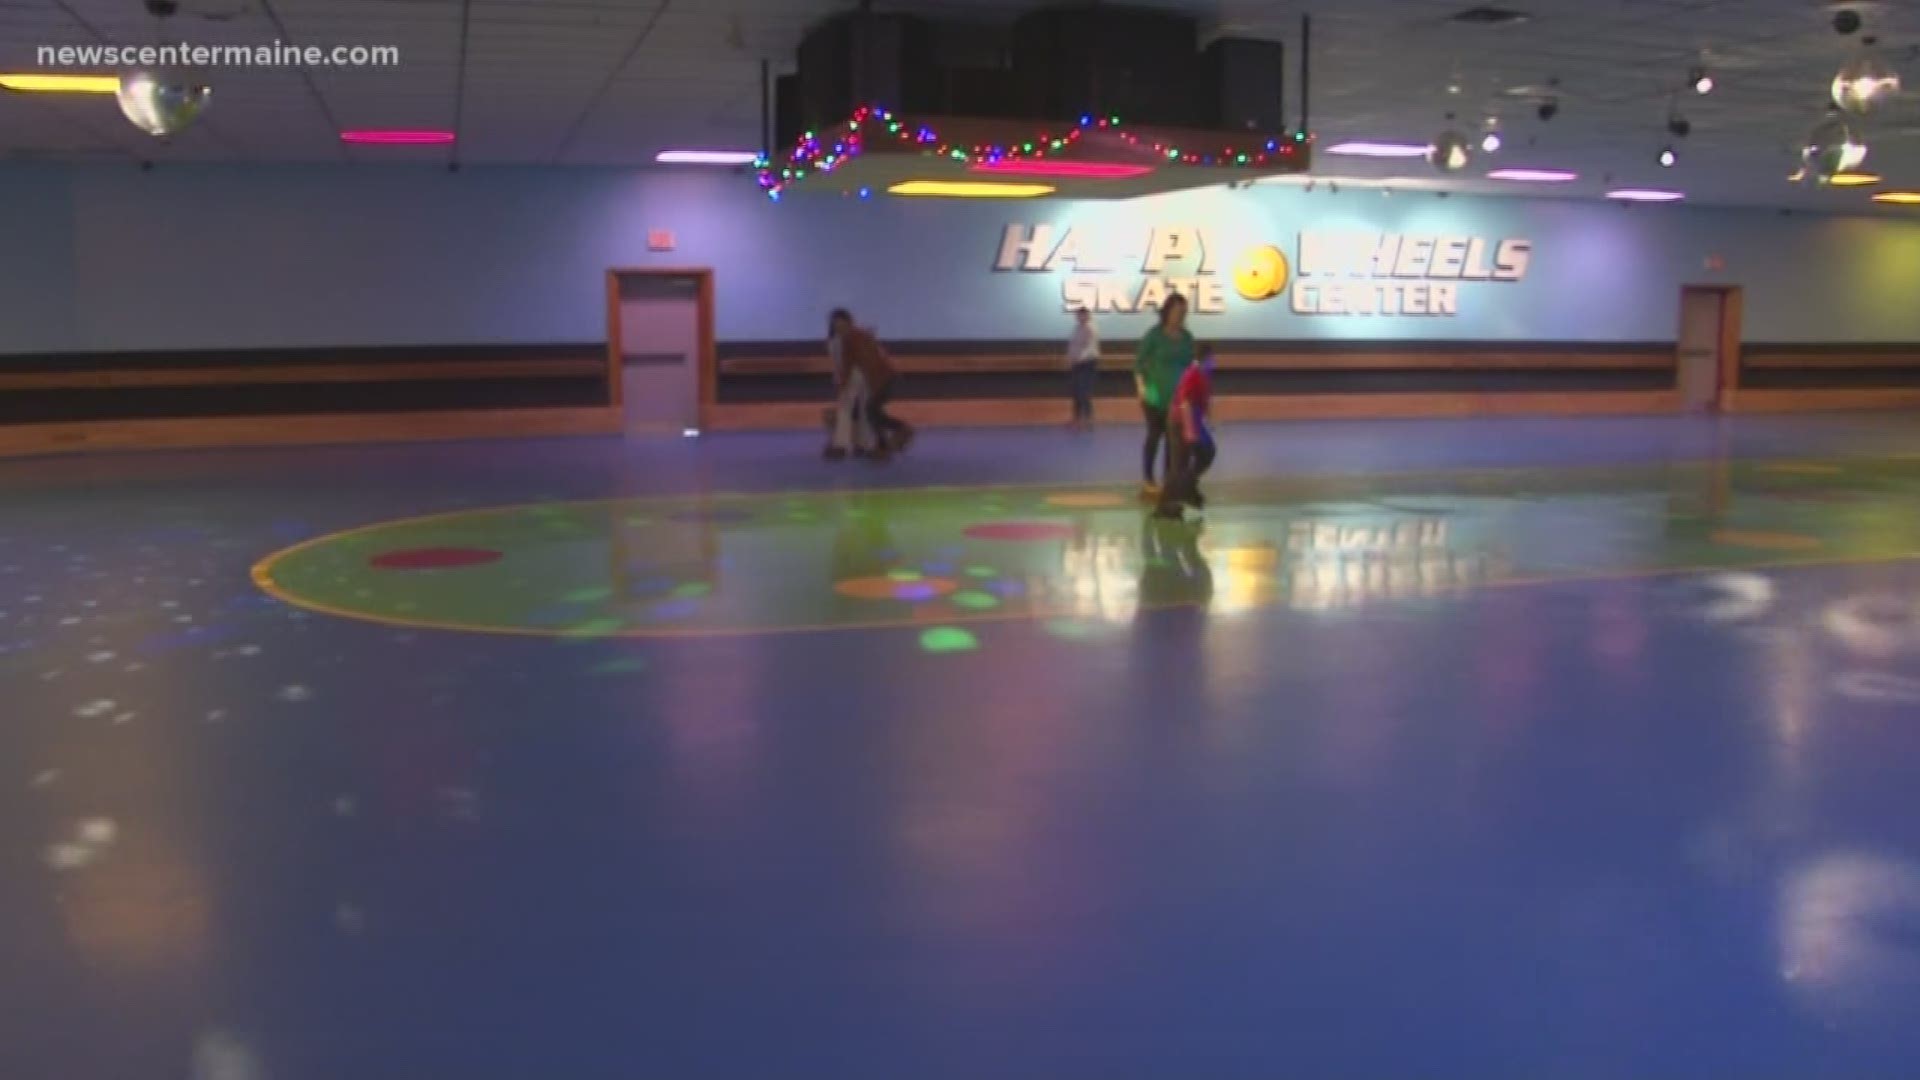 Happy Wheels Skate Center